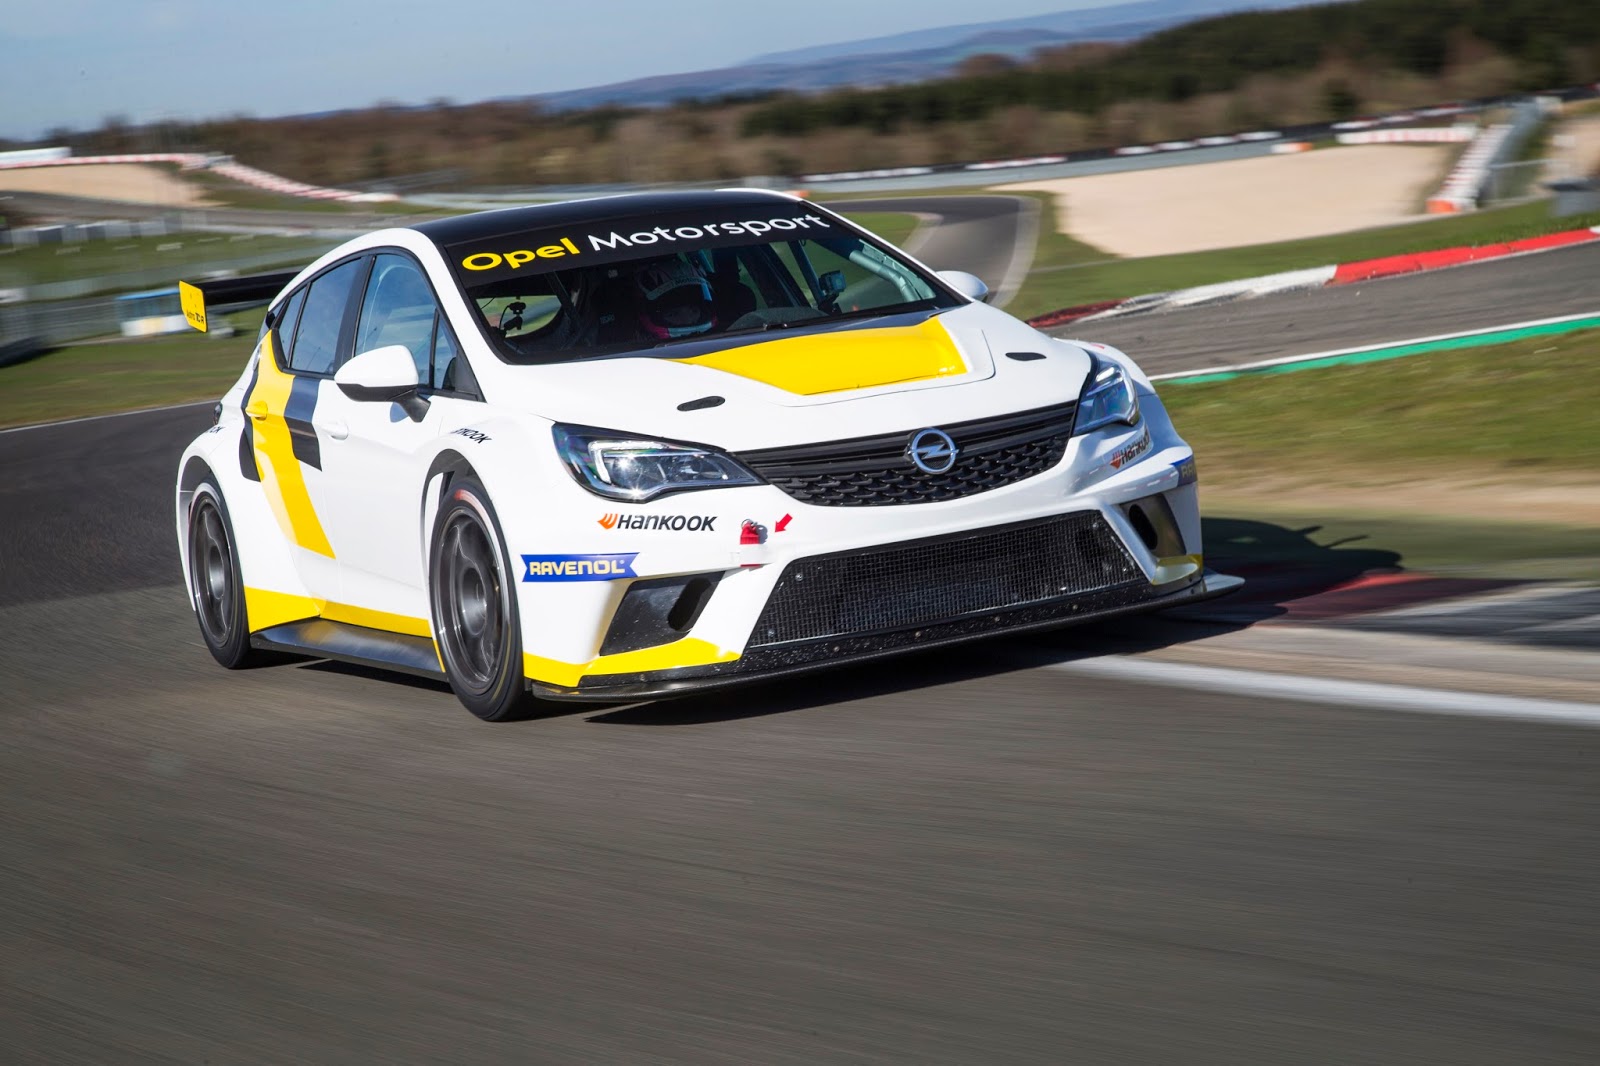 Opel Astra TCR 297112 To Opel Astra TCR του 2017, θα μπορεί να συμμετάσχει και σε αγώνες αντοχής